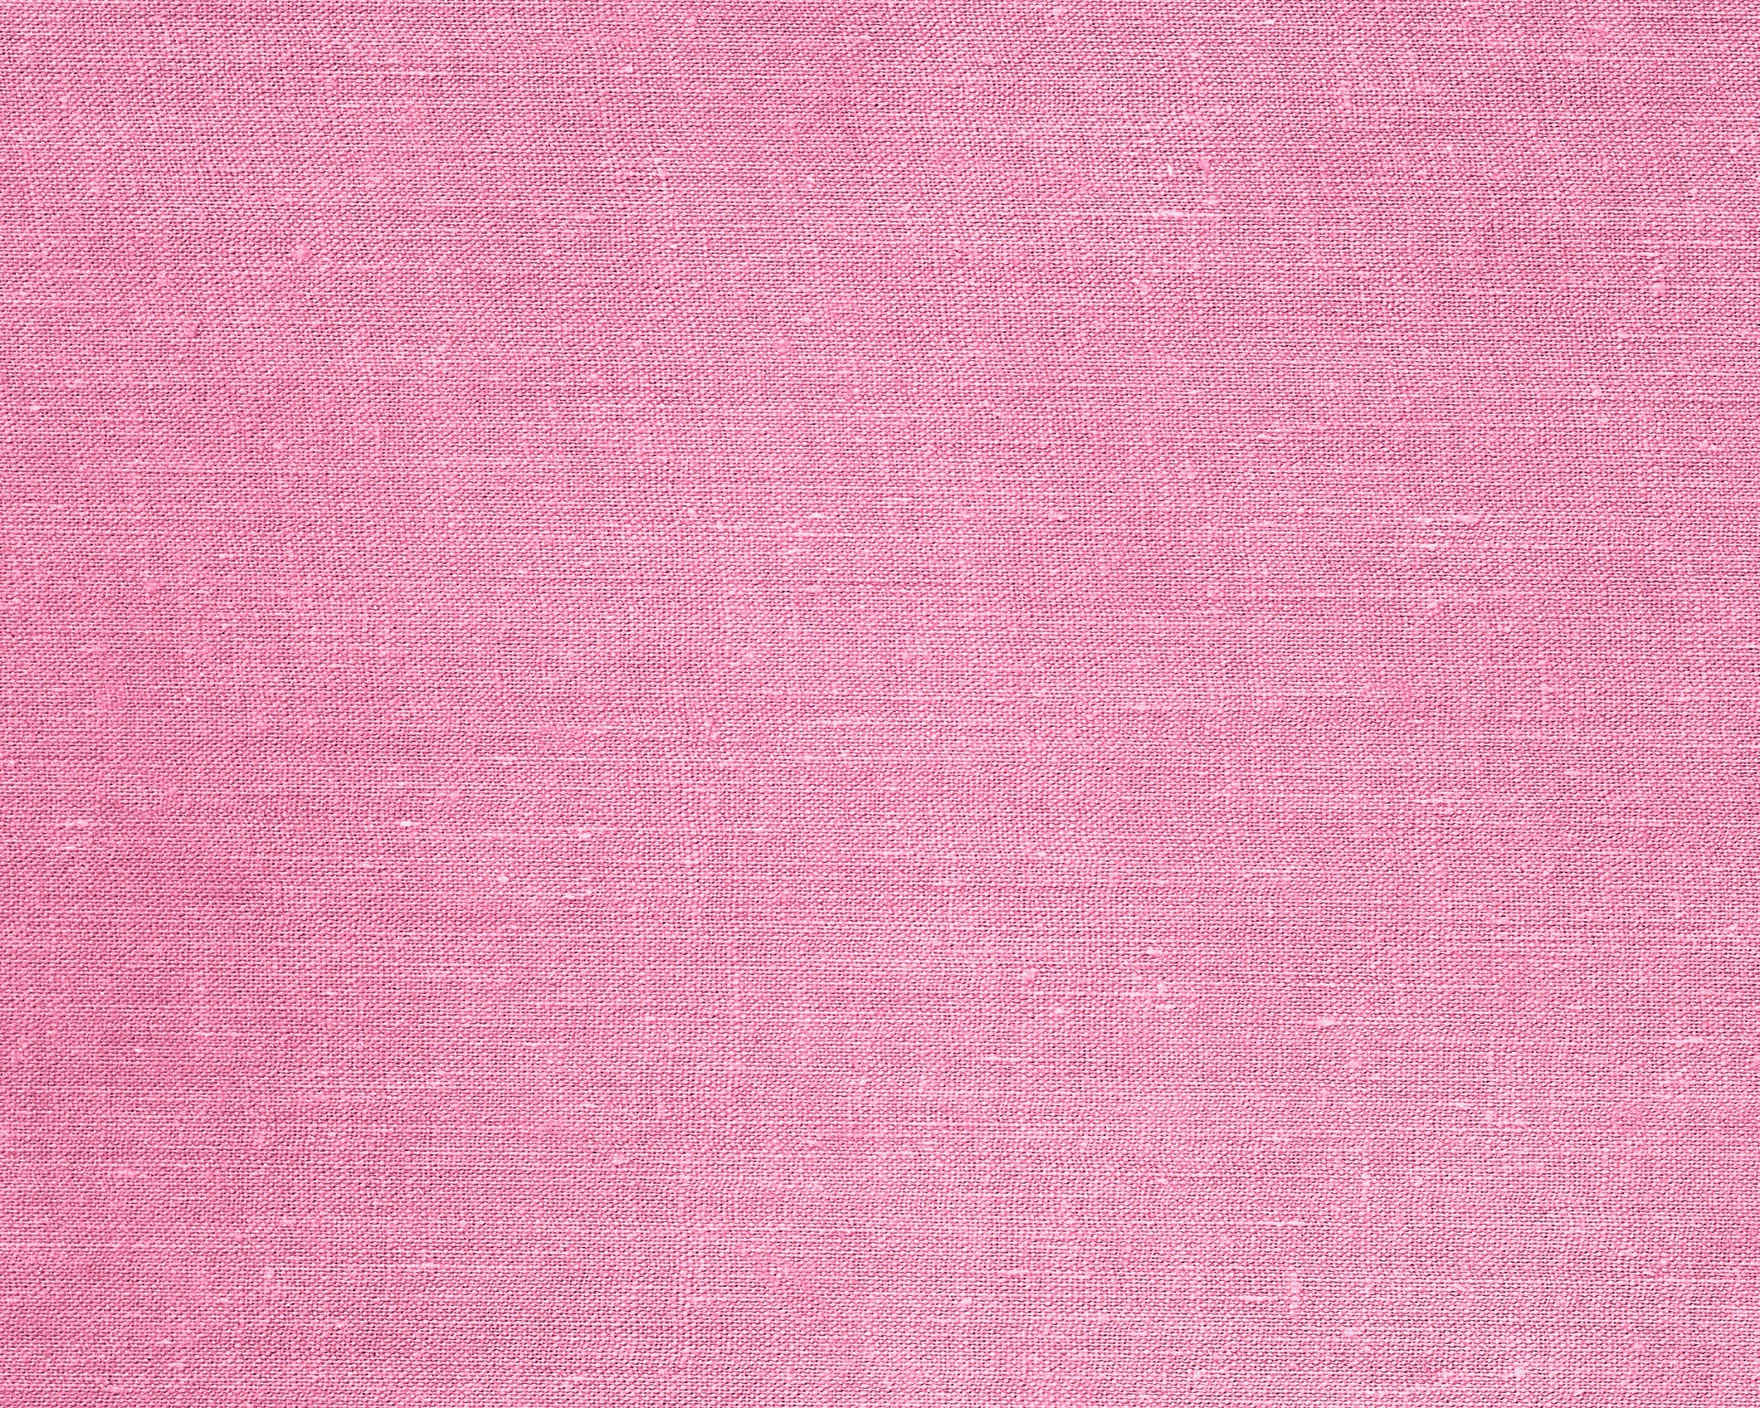 Pink Jute Background